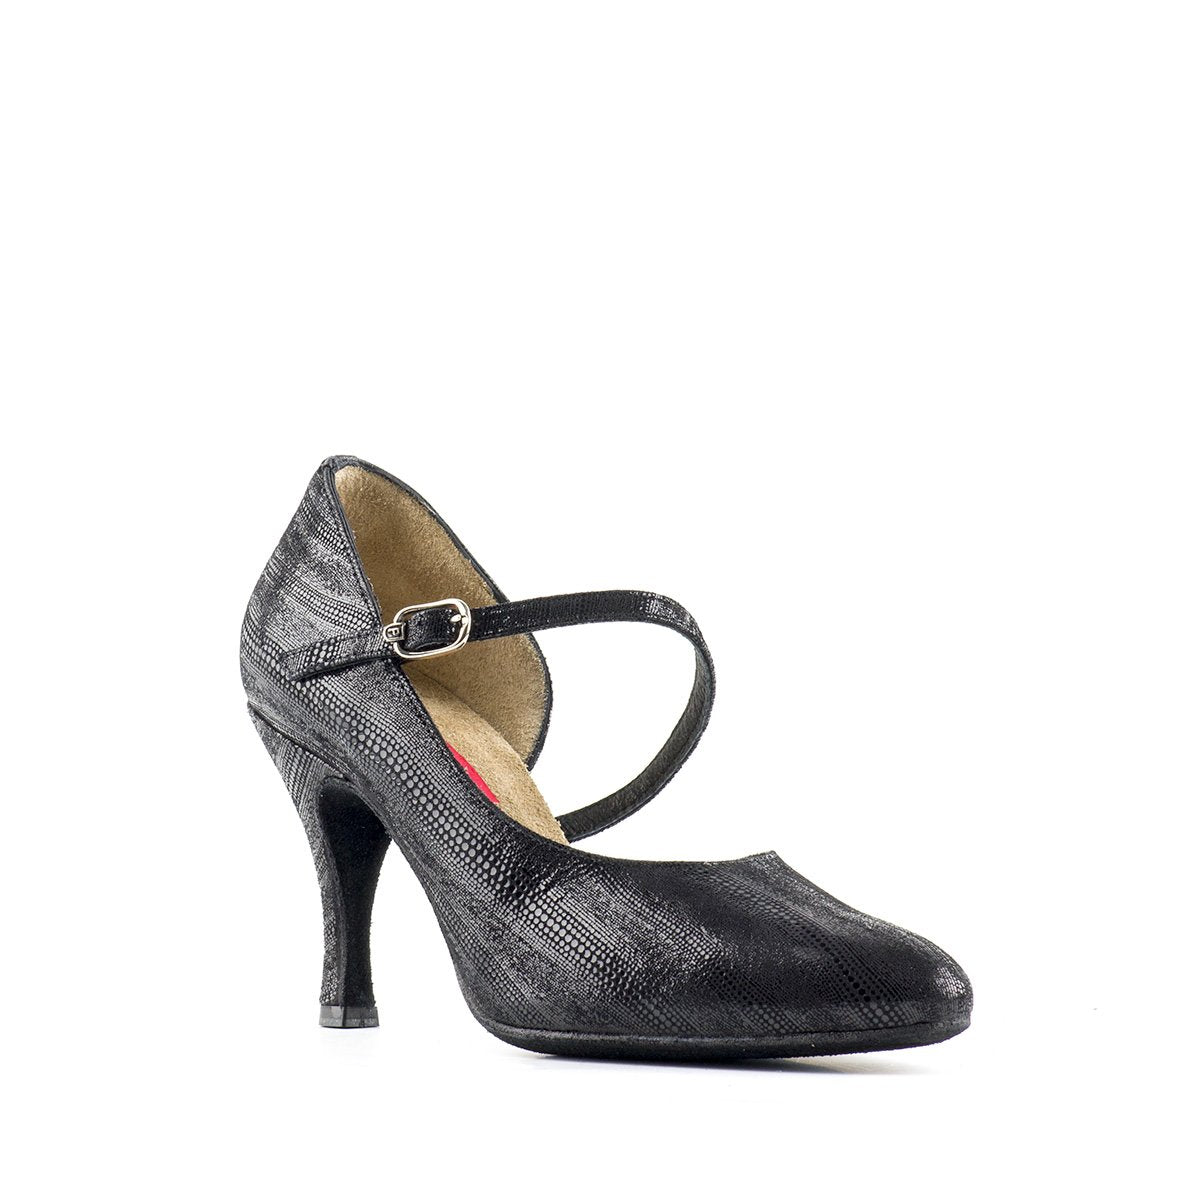 Black suede dance shoe for women